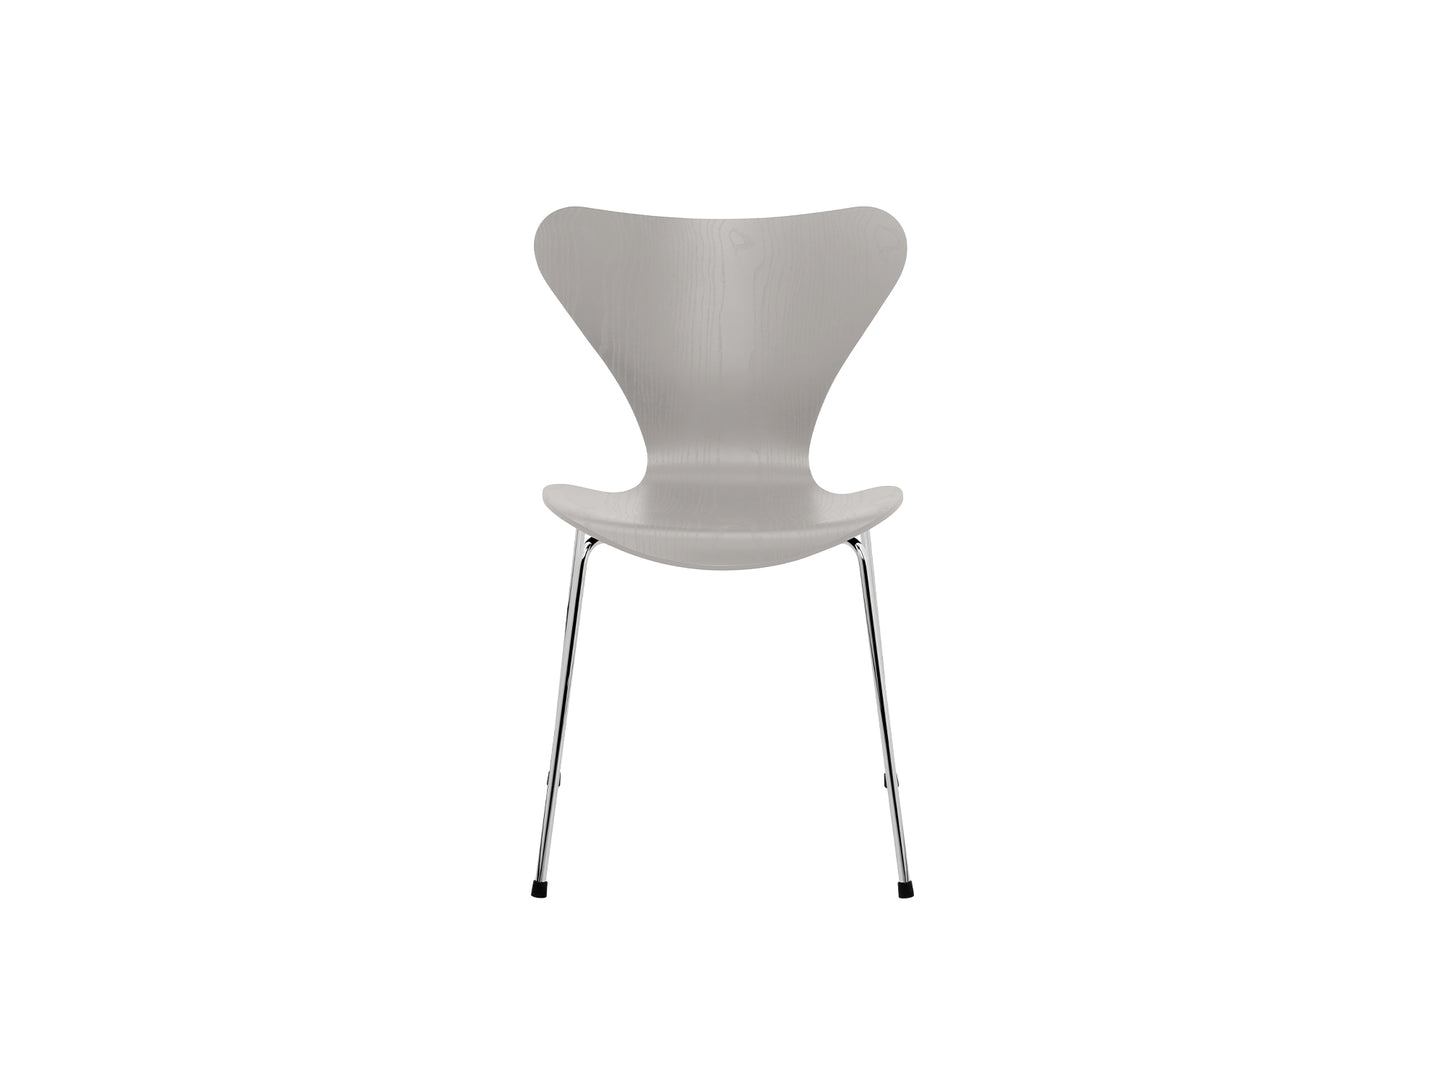 Series 7™ 3107 Dining Chair by Fritz Hansen - Nine Grey Coloured Ash Veneer Shell / Chromed Steel